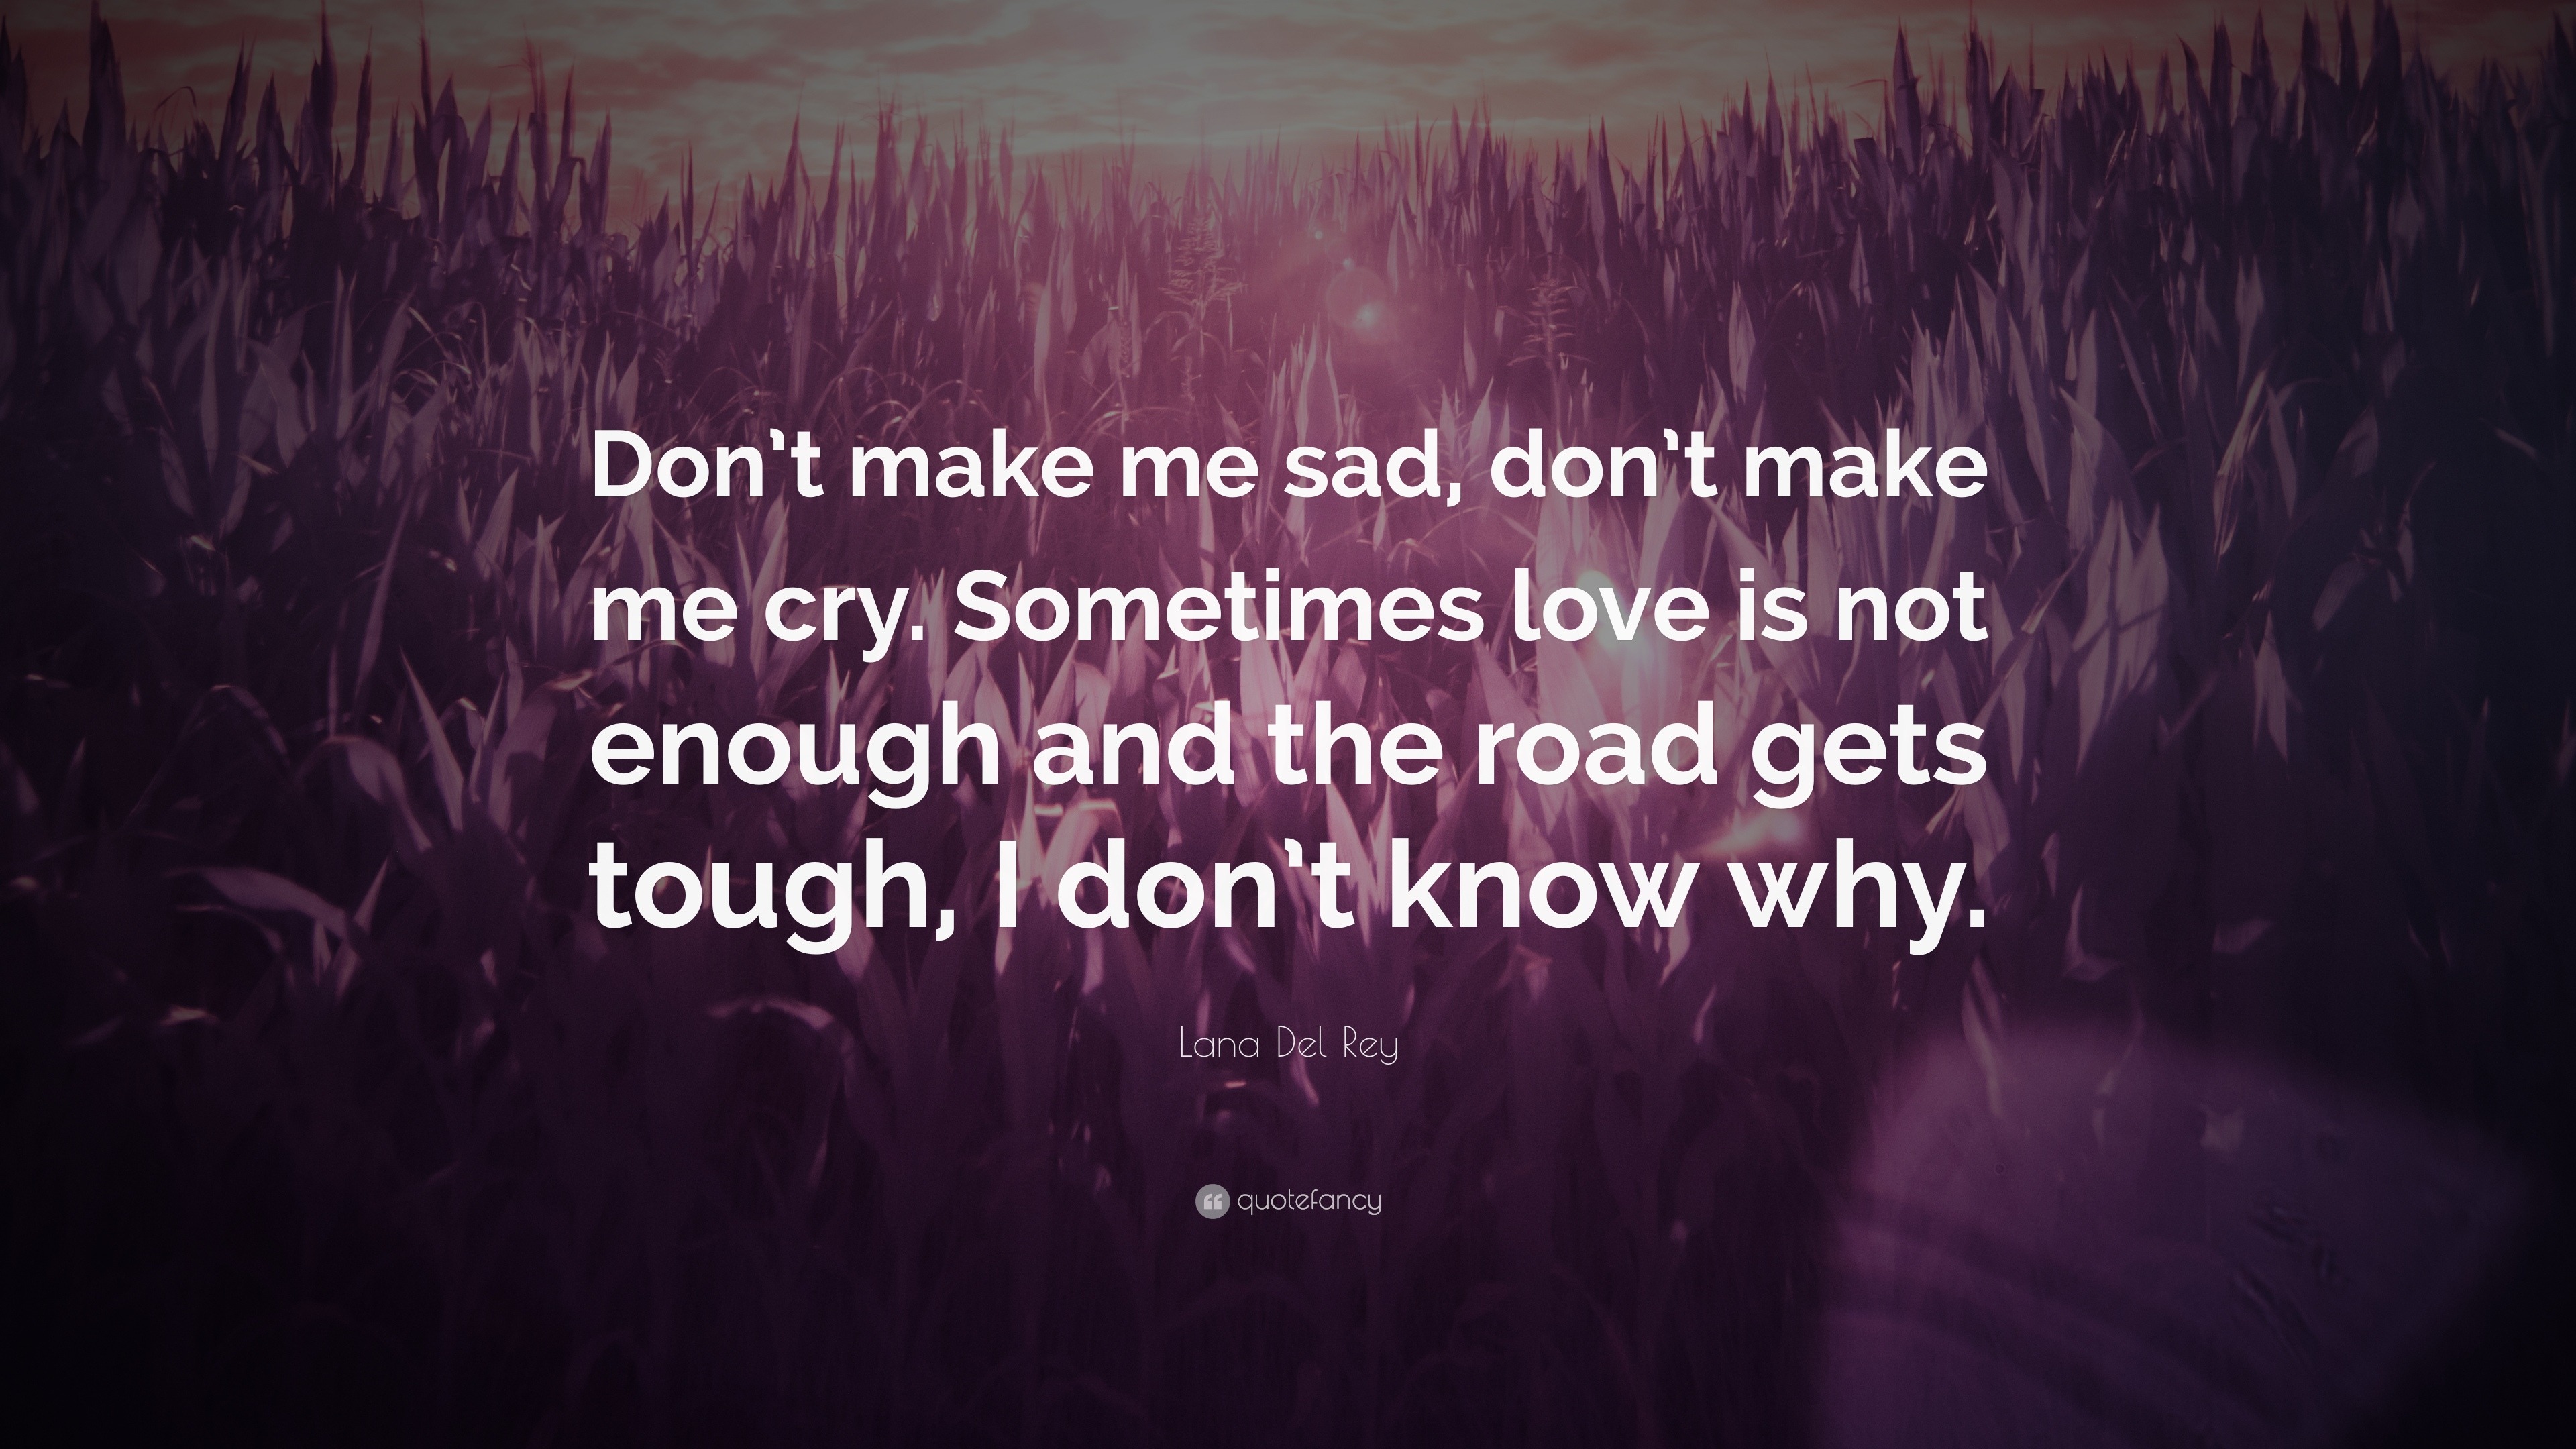 Lana Del Rey Quote “Don t make me sad don t